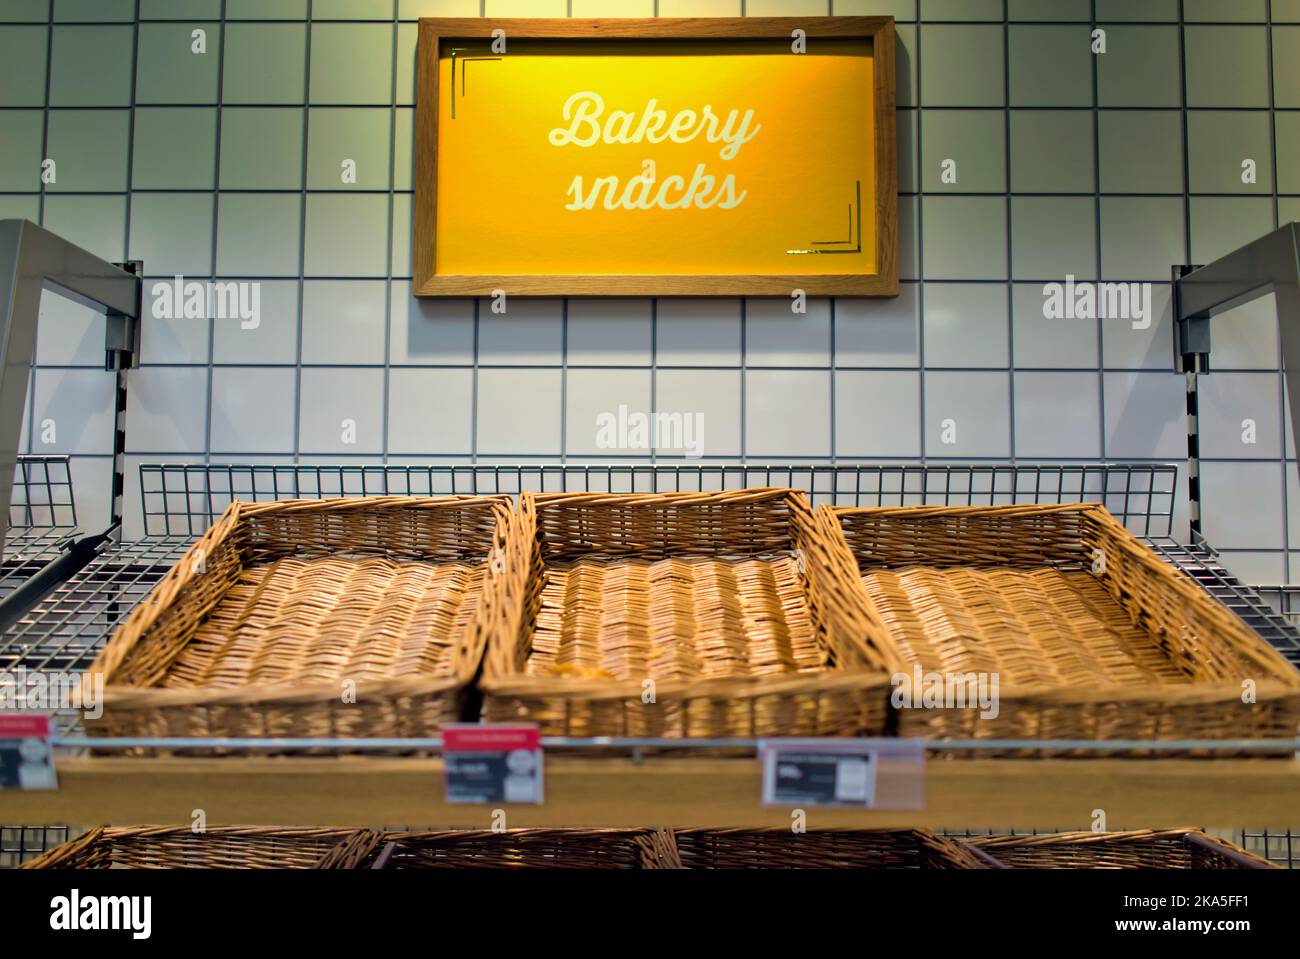 Leere Regale Bäckerei Snacks Versorgung Probleme Krieg Panik Kauf etc Stockfoto